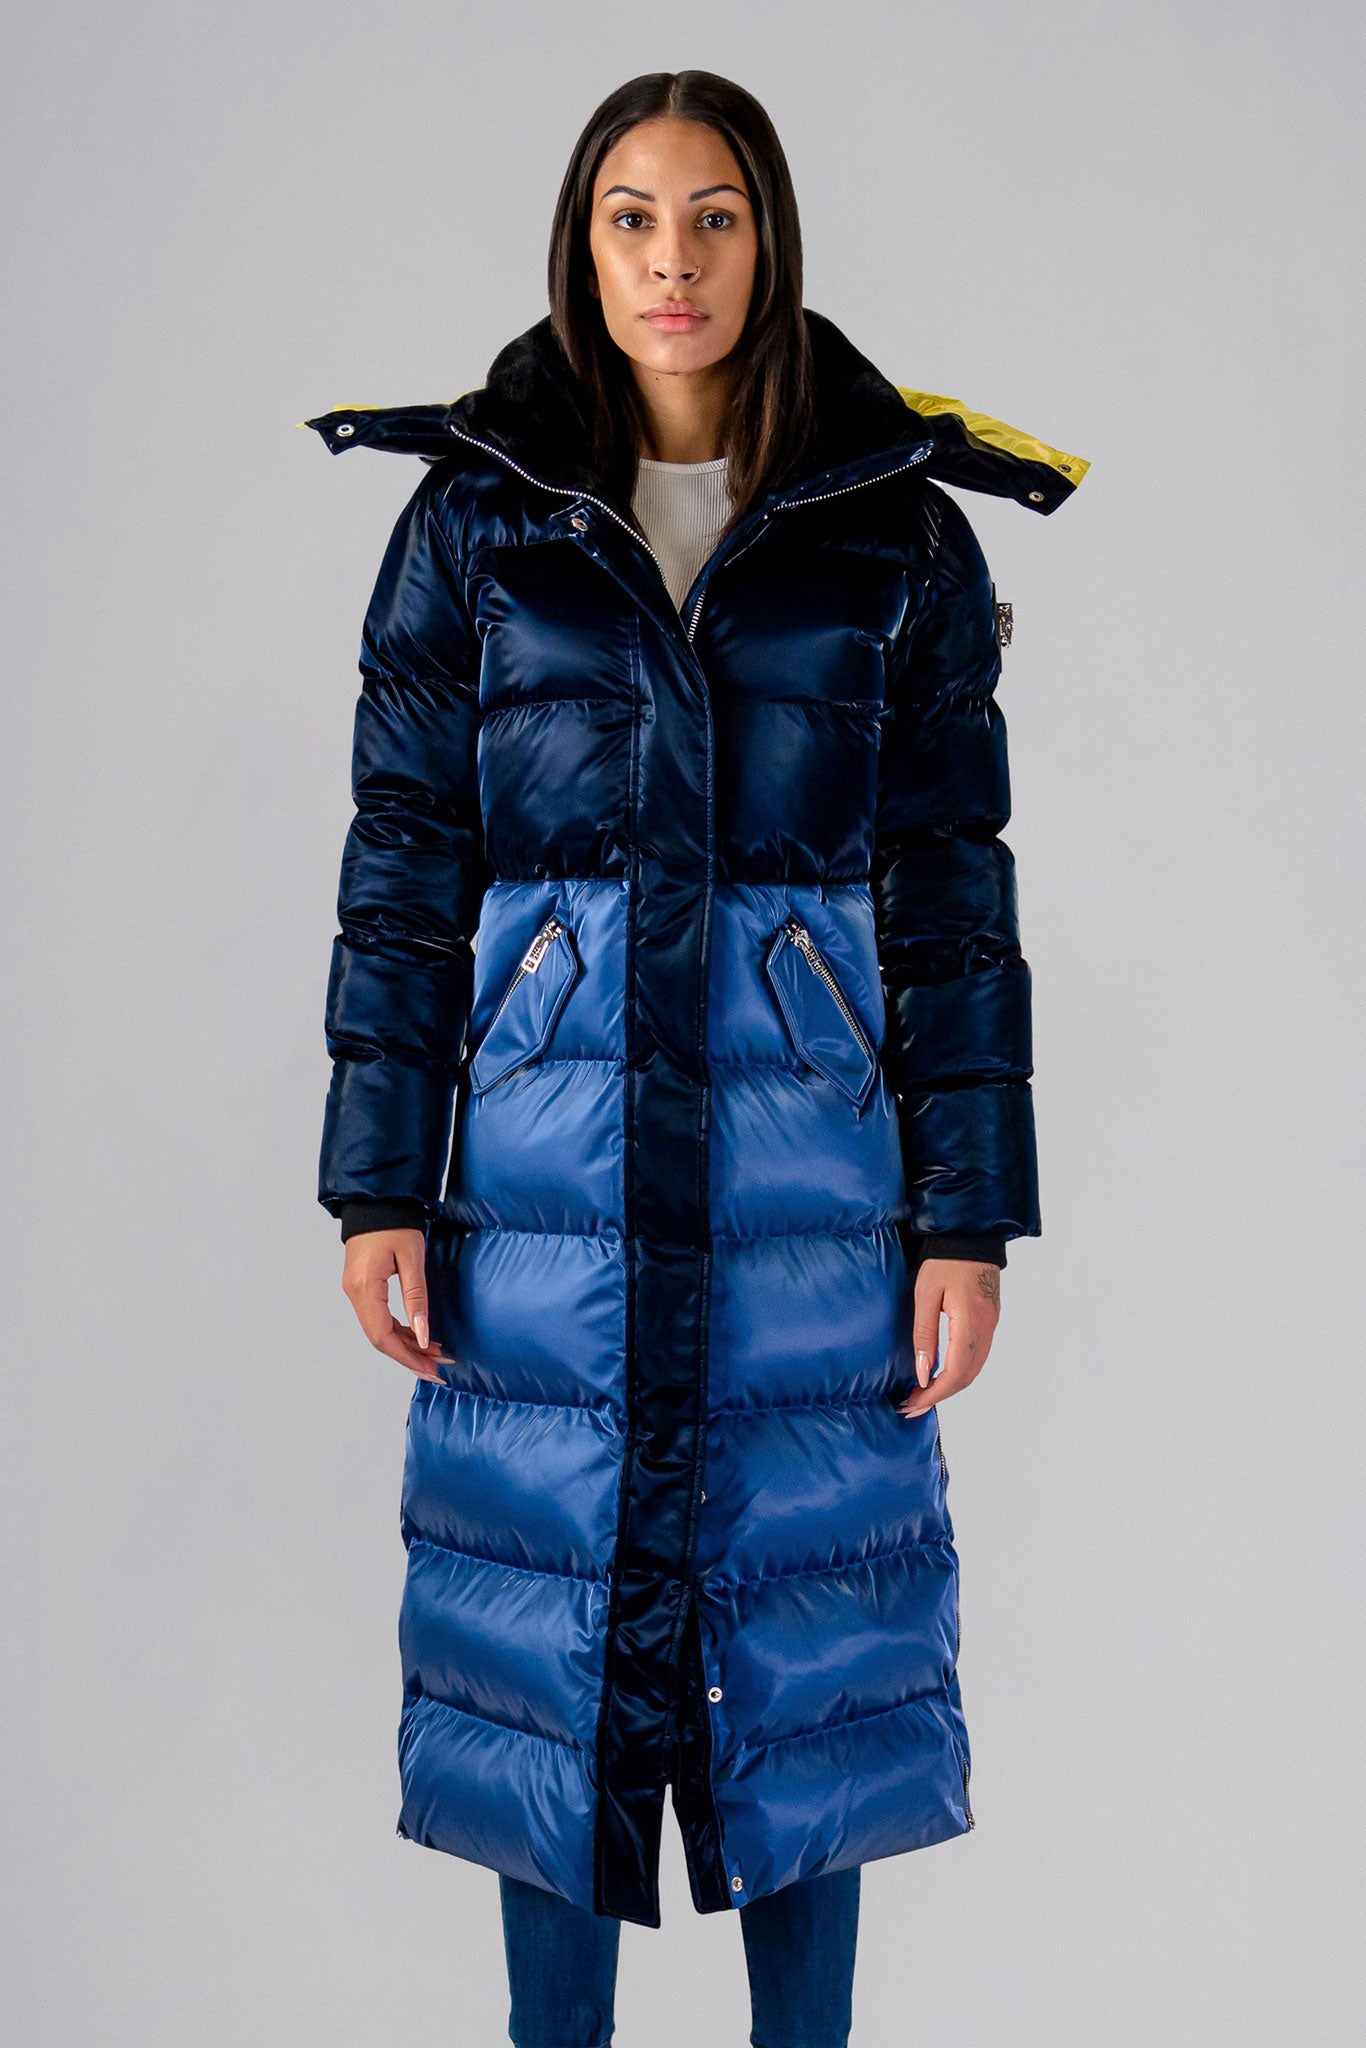 Woodpecker Women's Extra Long Bird of Paradise Winter coat. High-end Canadian designer winter coat for women in “Blue Yellow